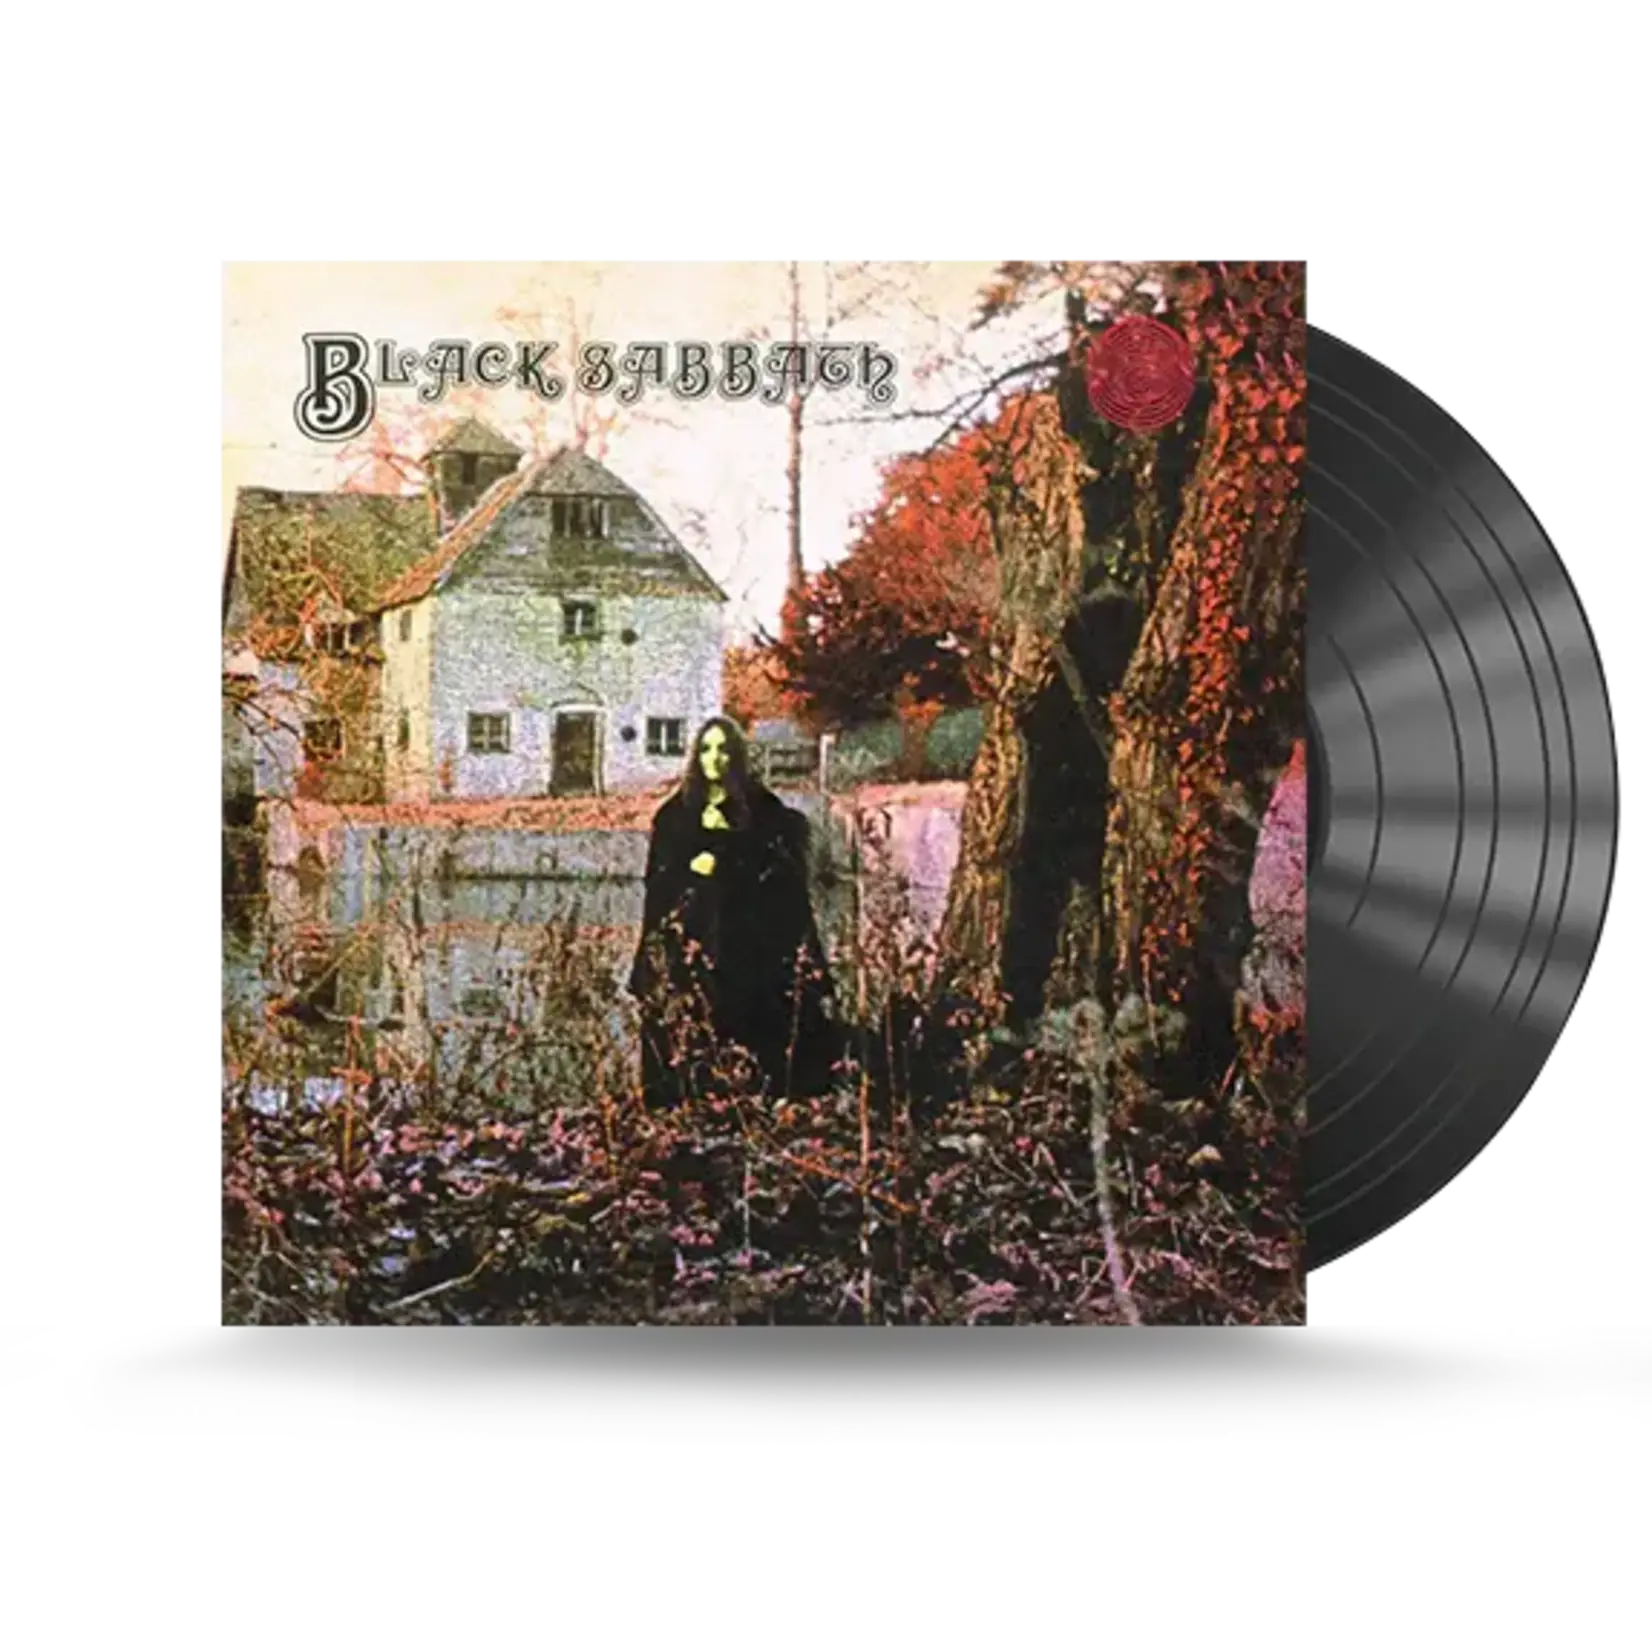 Black Sabbath - Black Sabbath [LP]